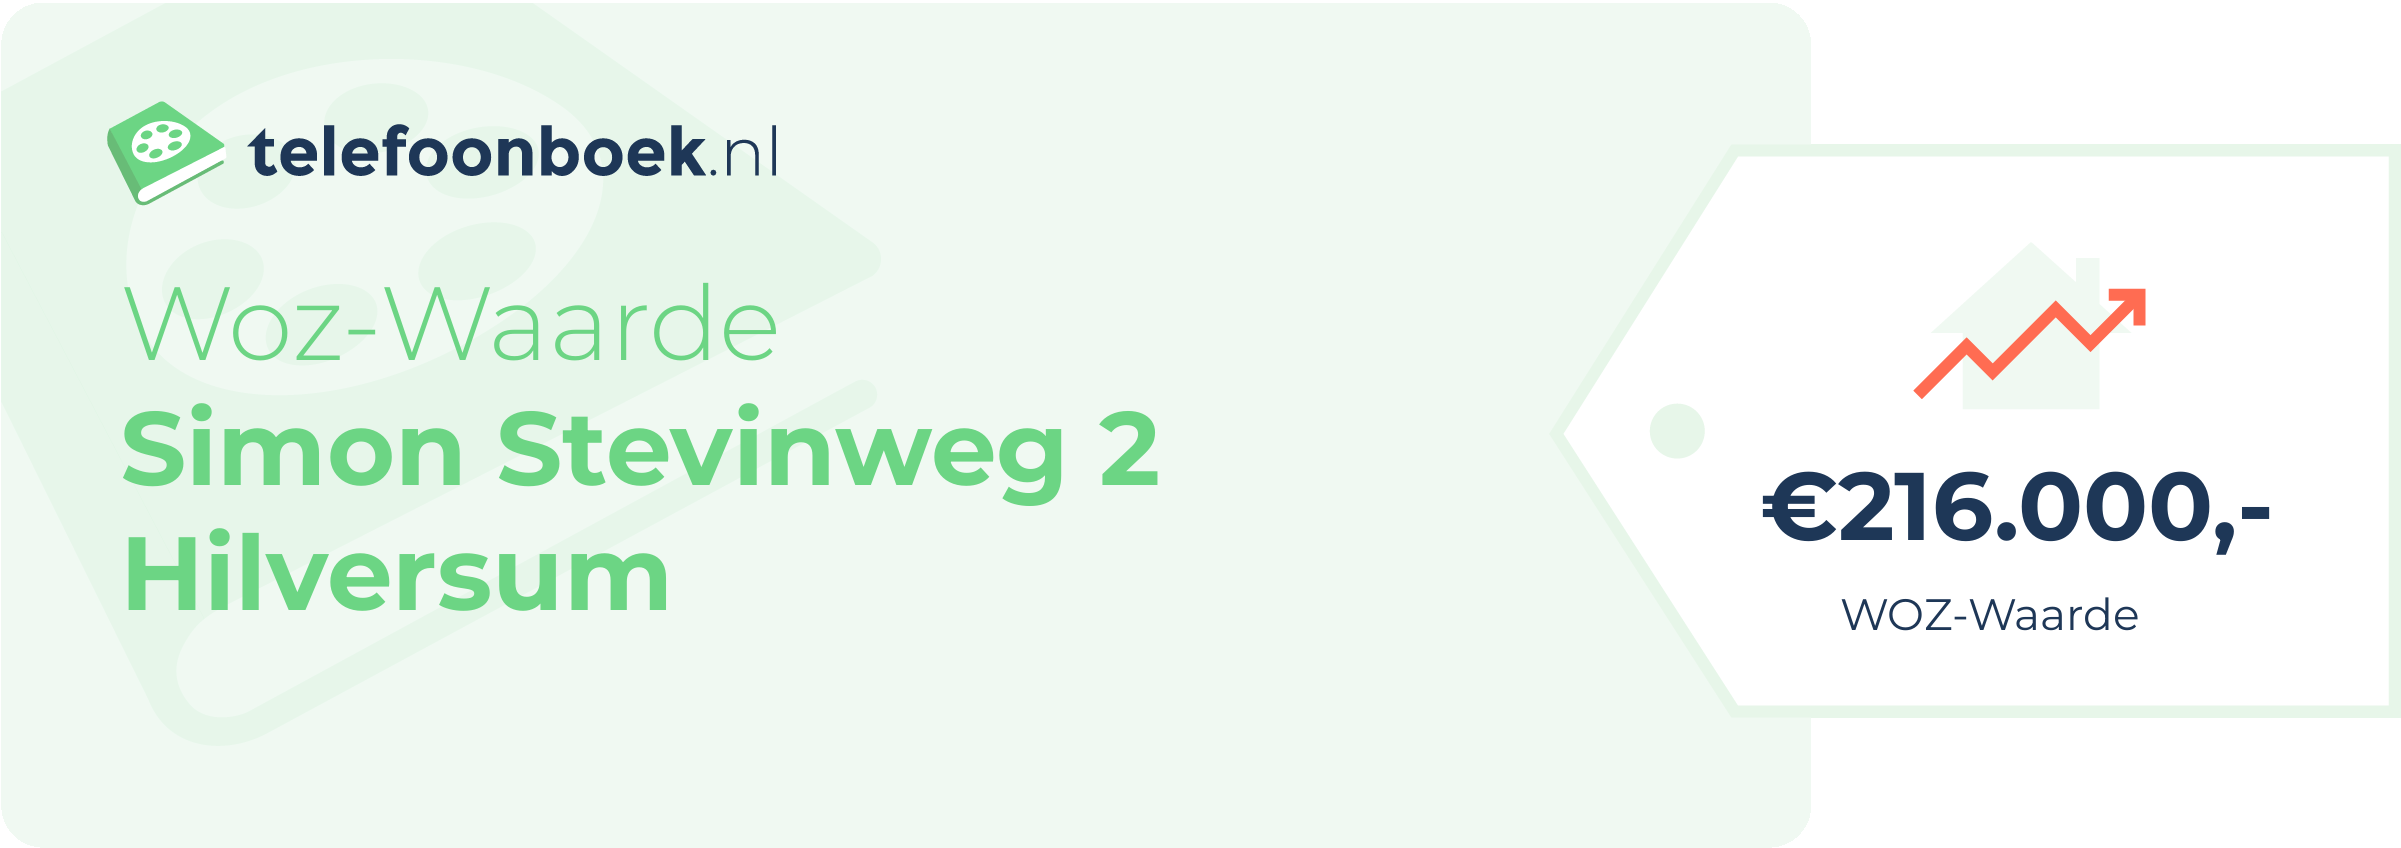 WOZ-waarde Simon Stevinweg 2 Hilversum